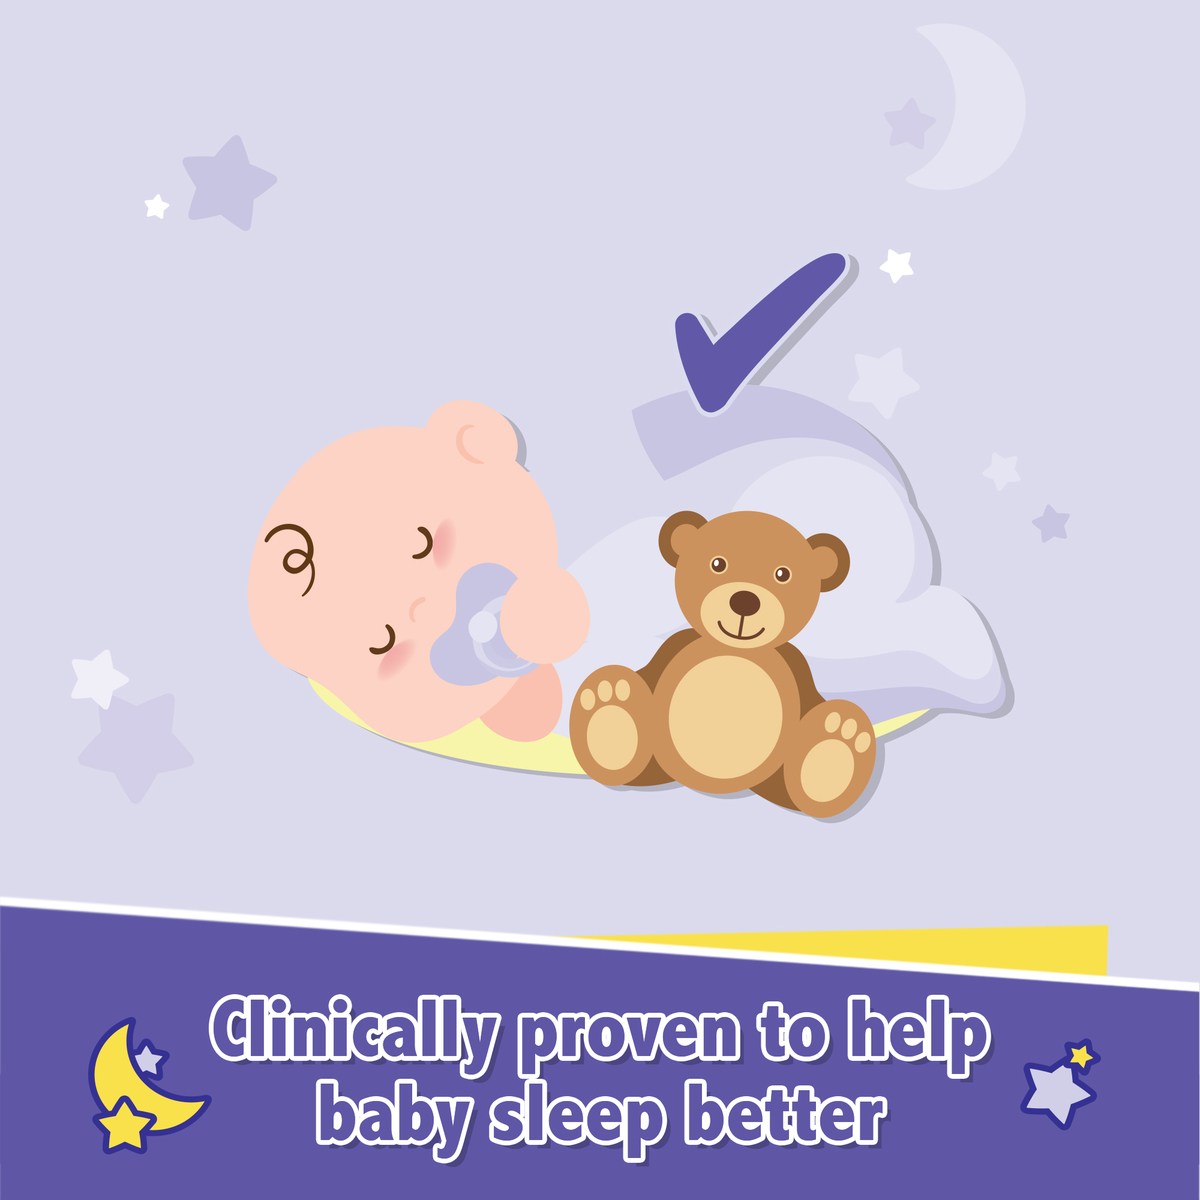 Johnson's Baby Baby Bath Sleep Time 500ml